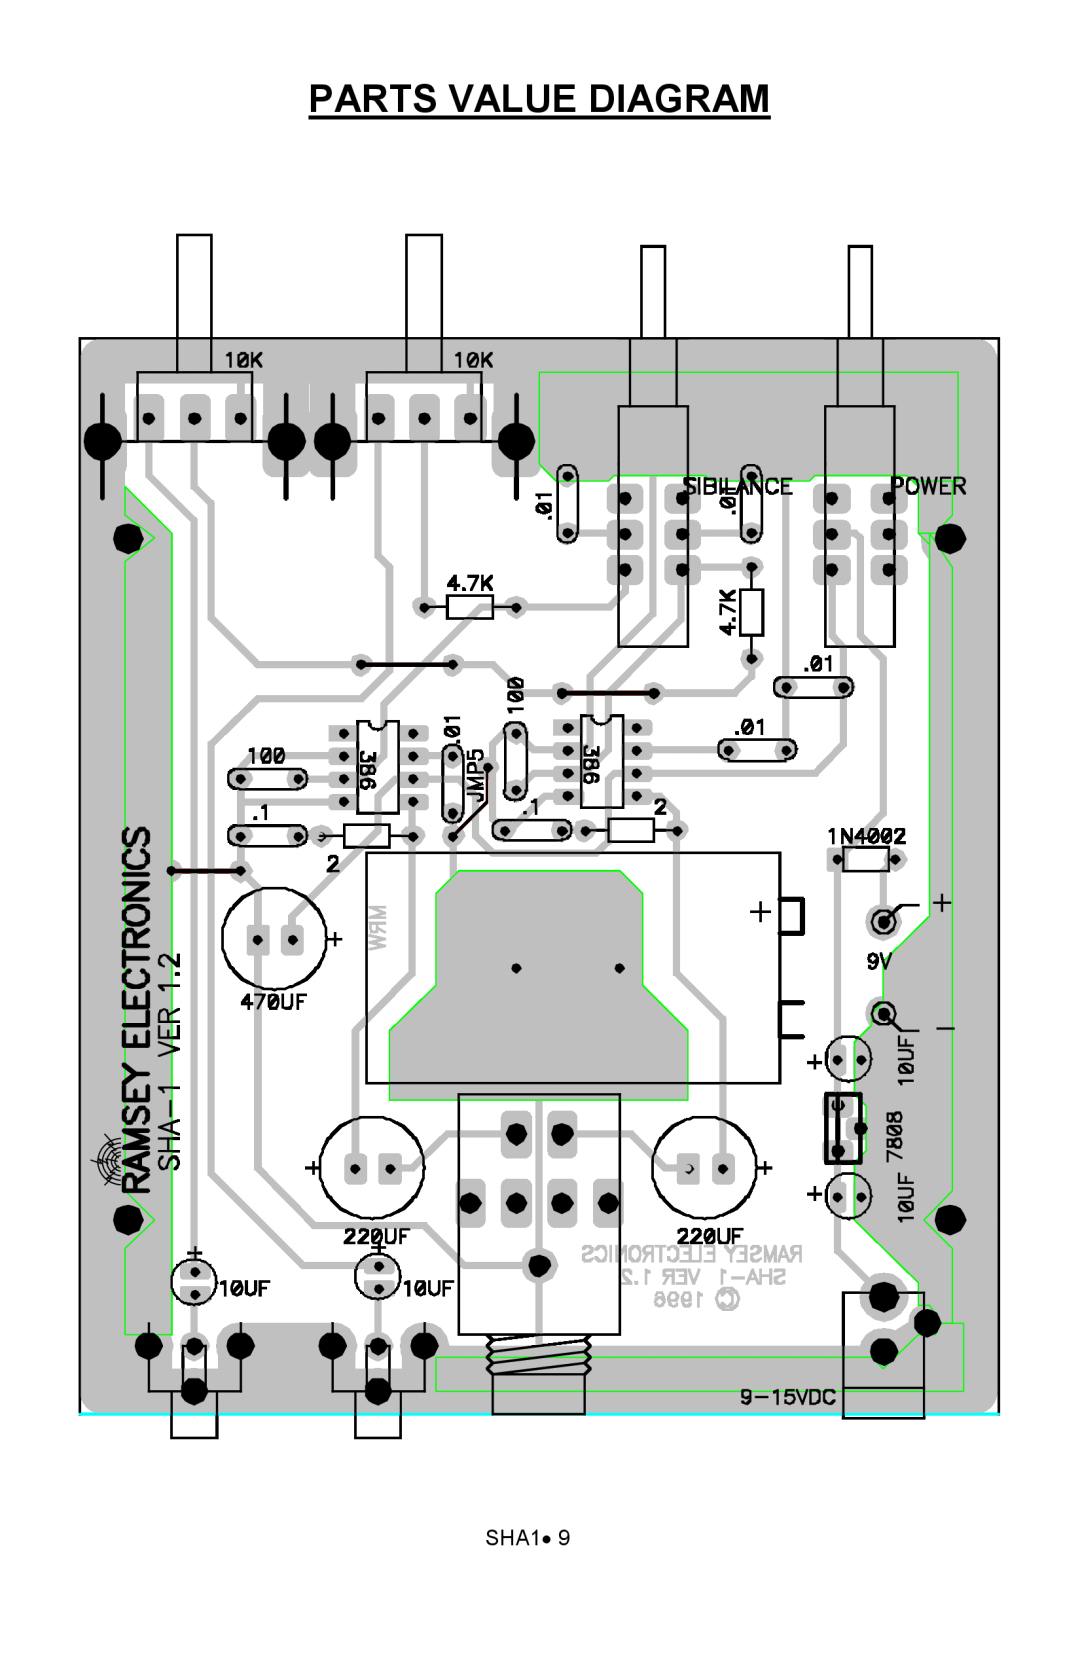 Ramsey Electronics SHA1 manual Parts Value Diagram 